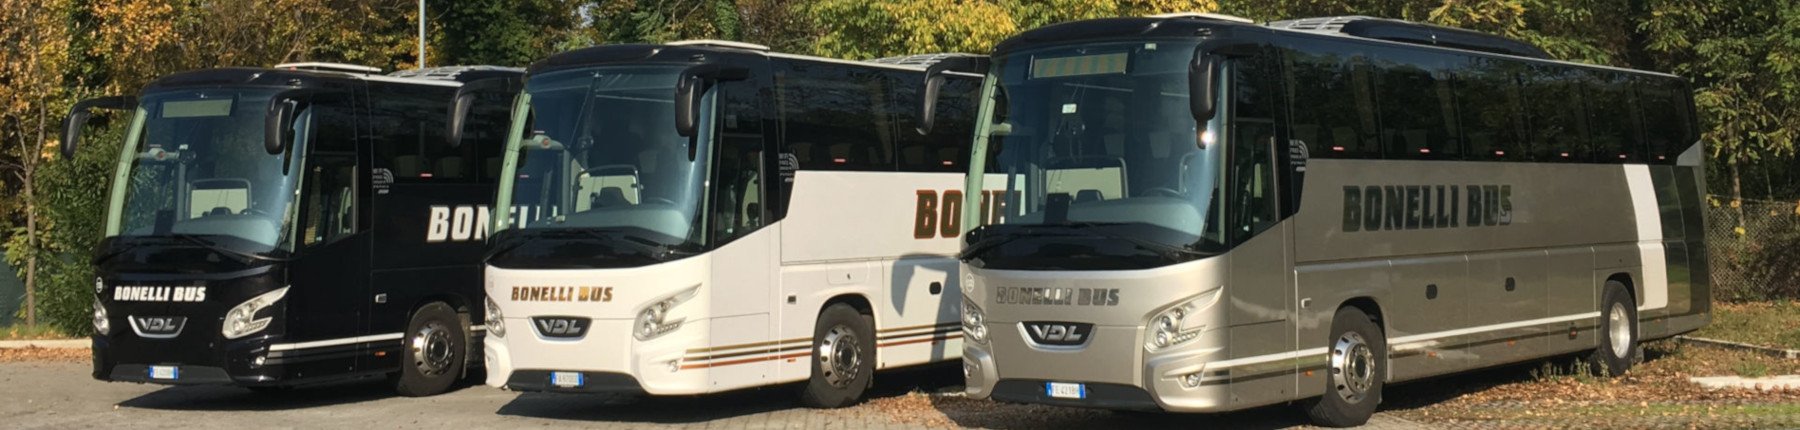 Bonelli Bus transaportation services